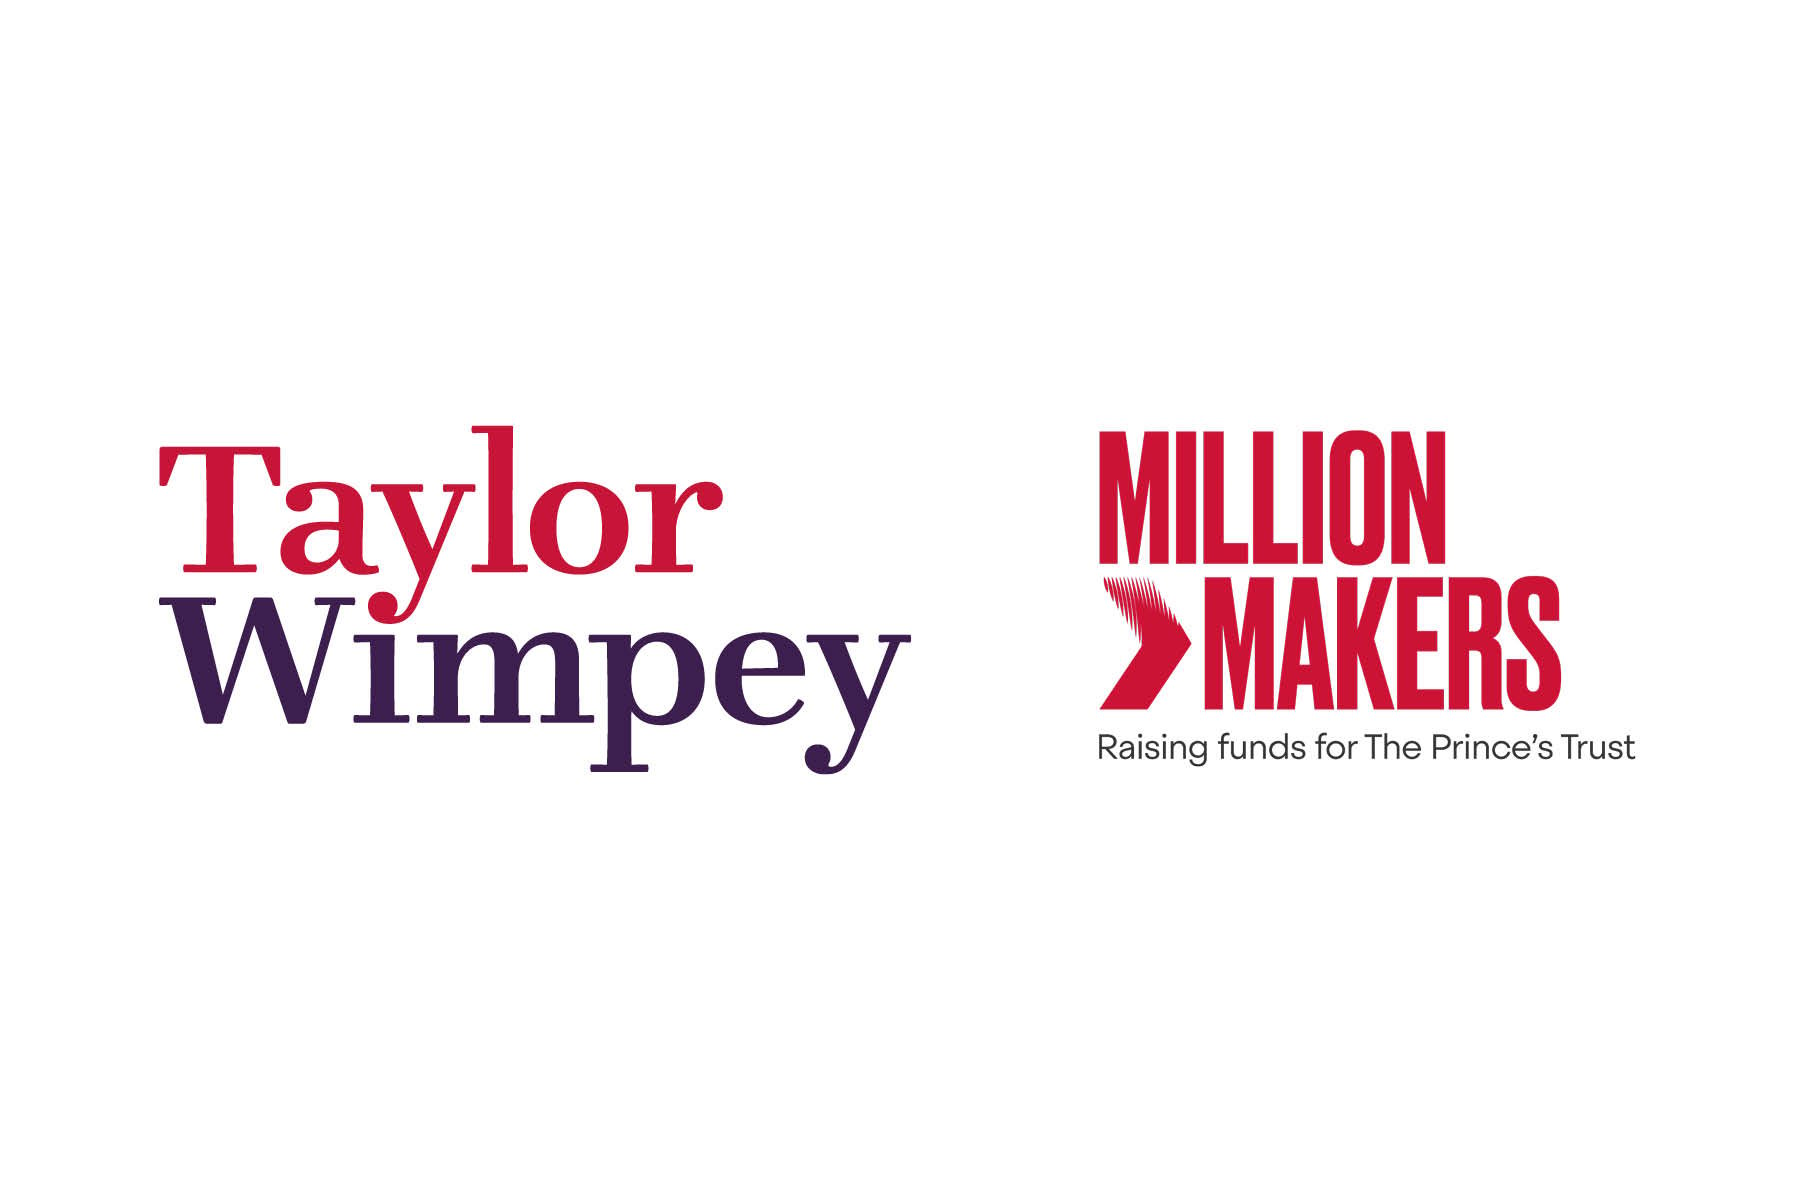 Million makers